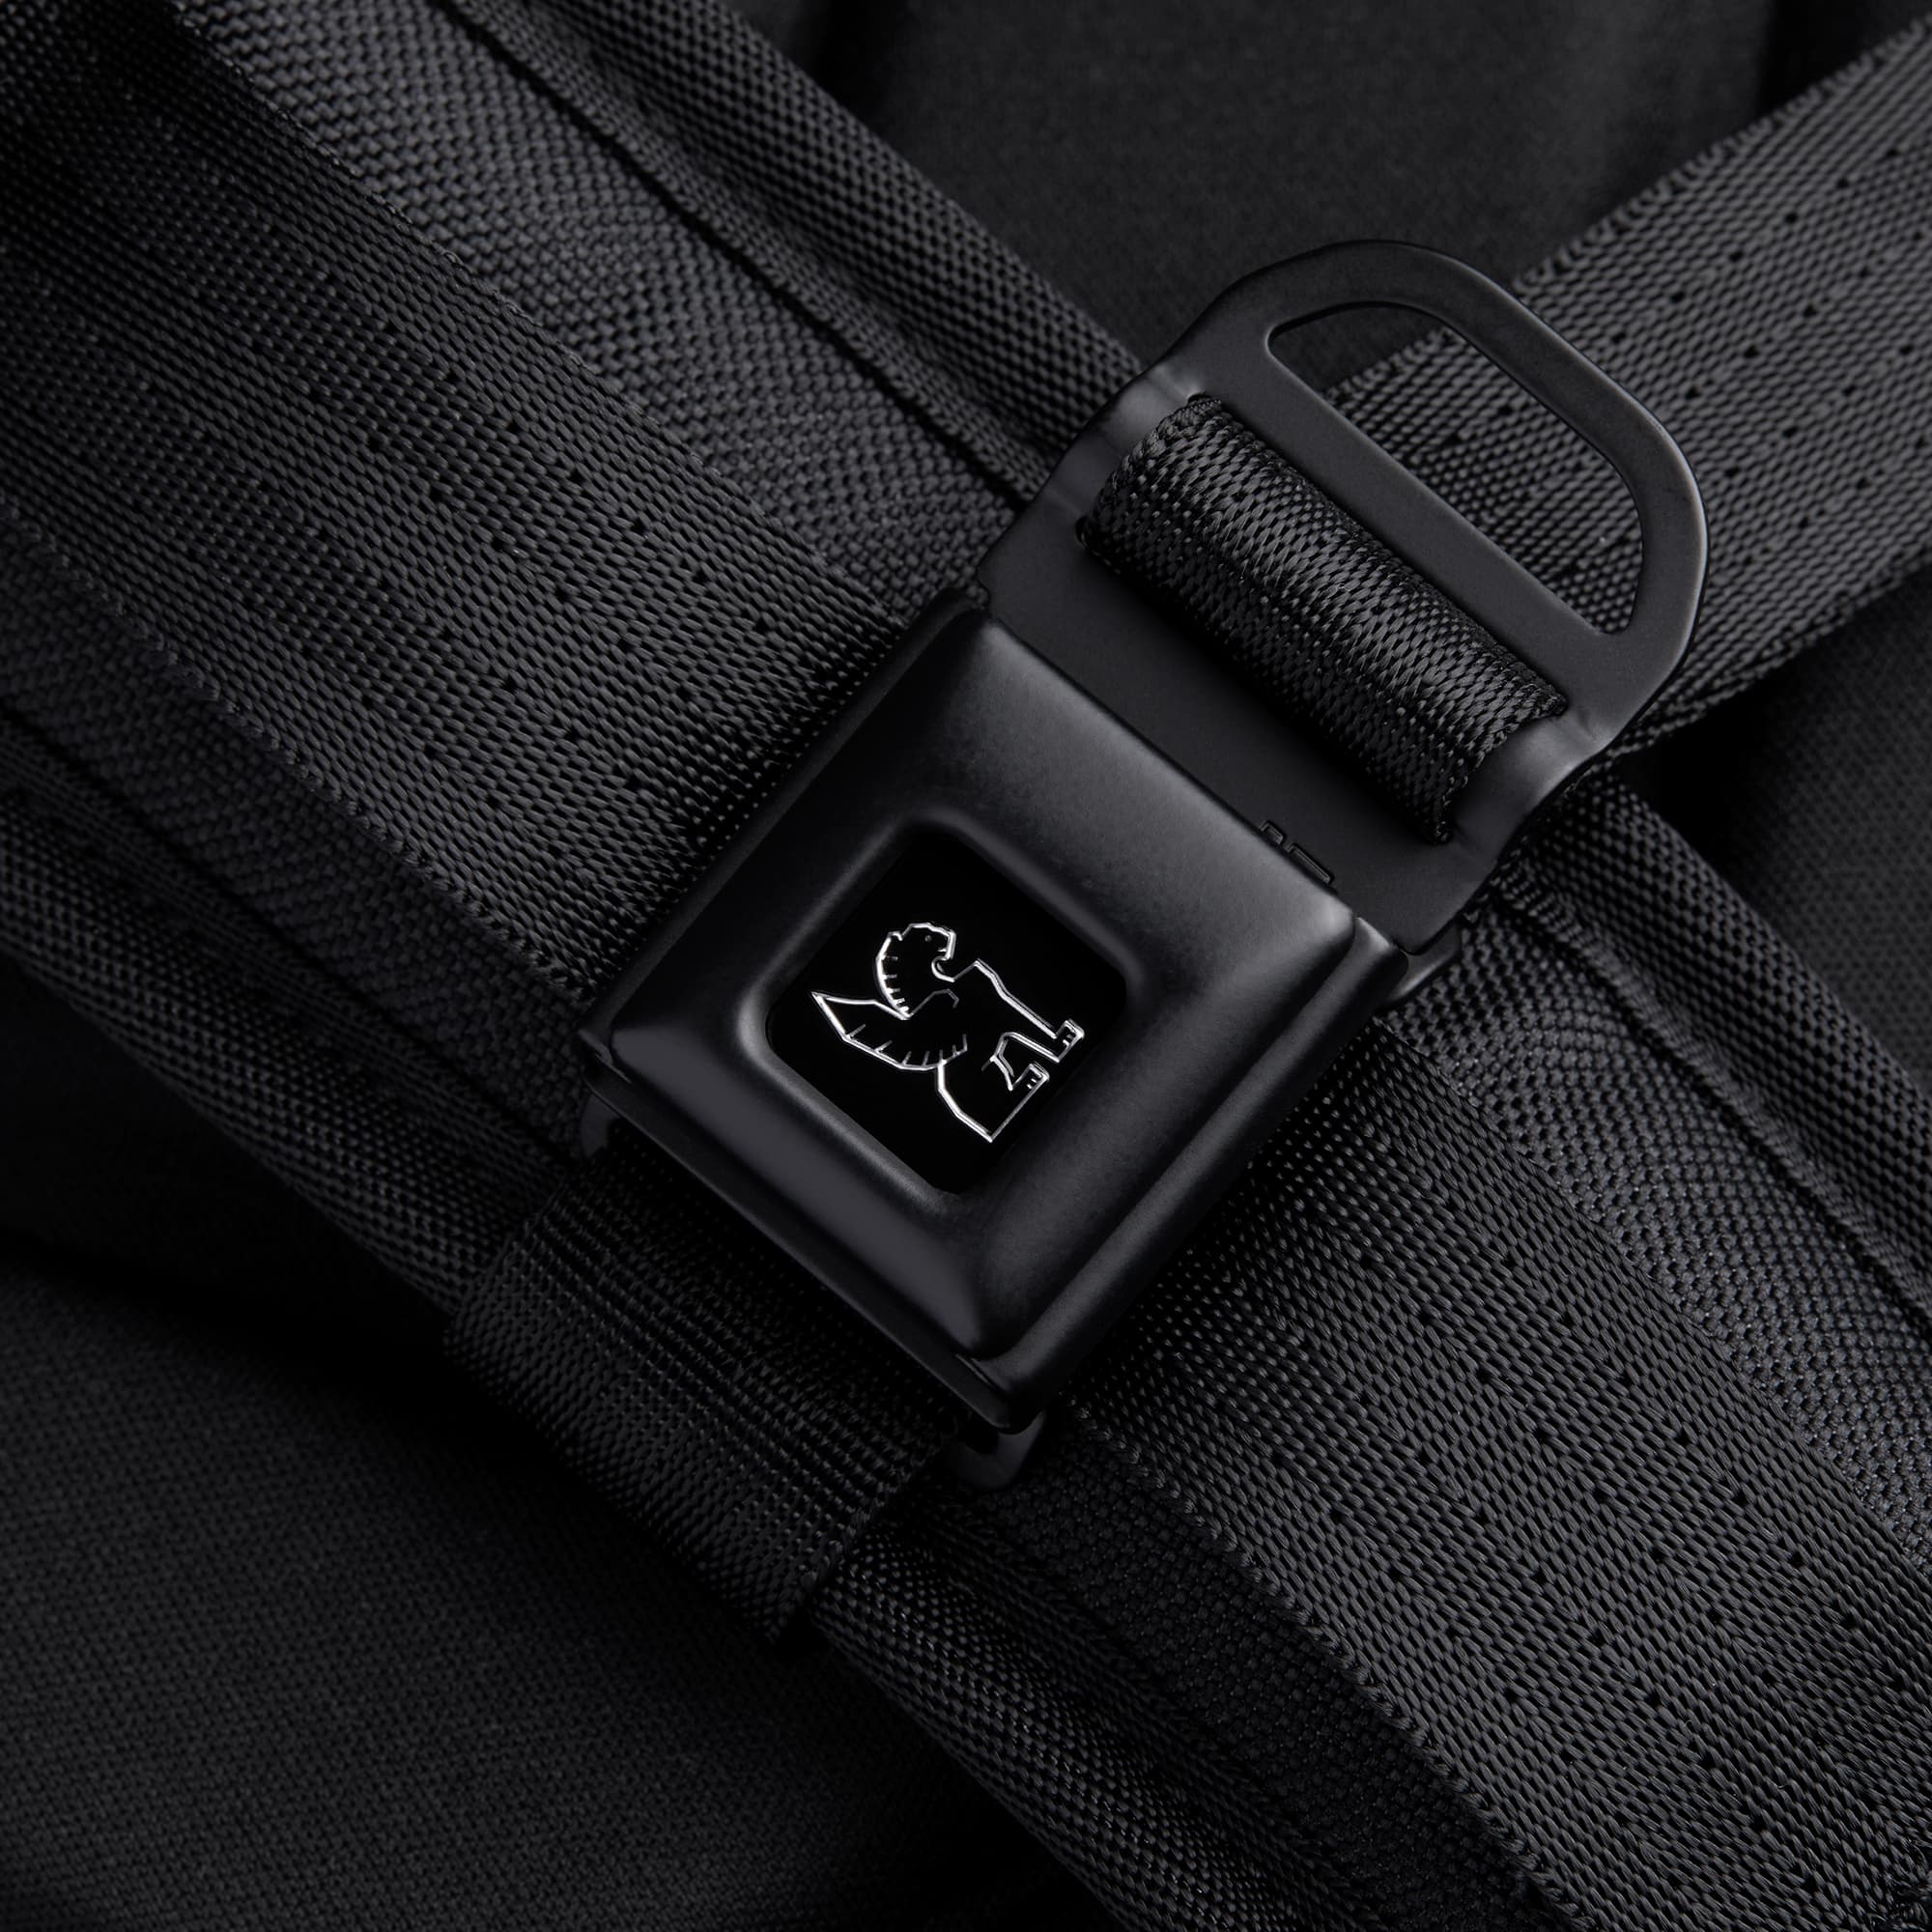 Niko camera tech backpack in black iconic Chrome buckle closure